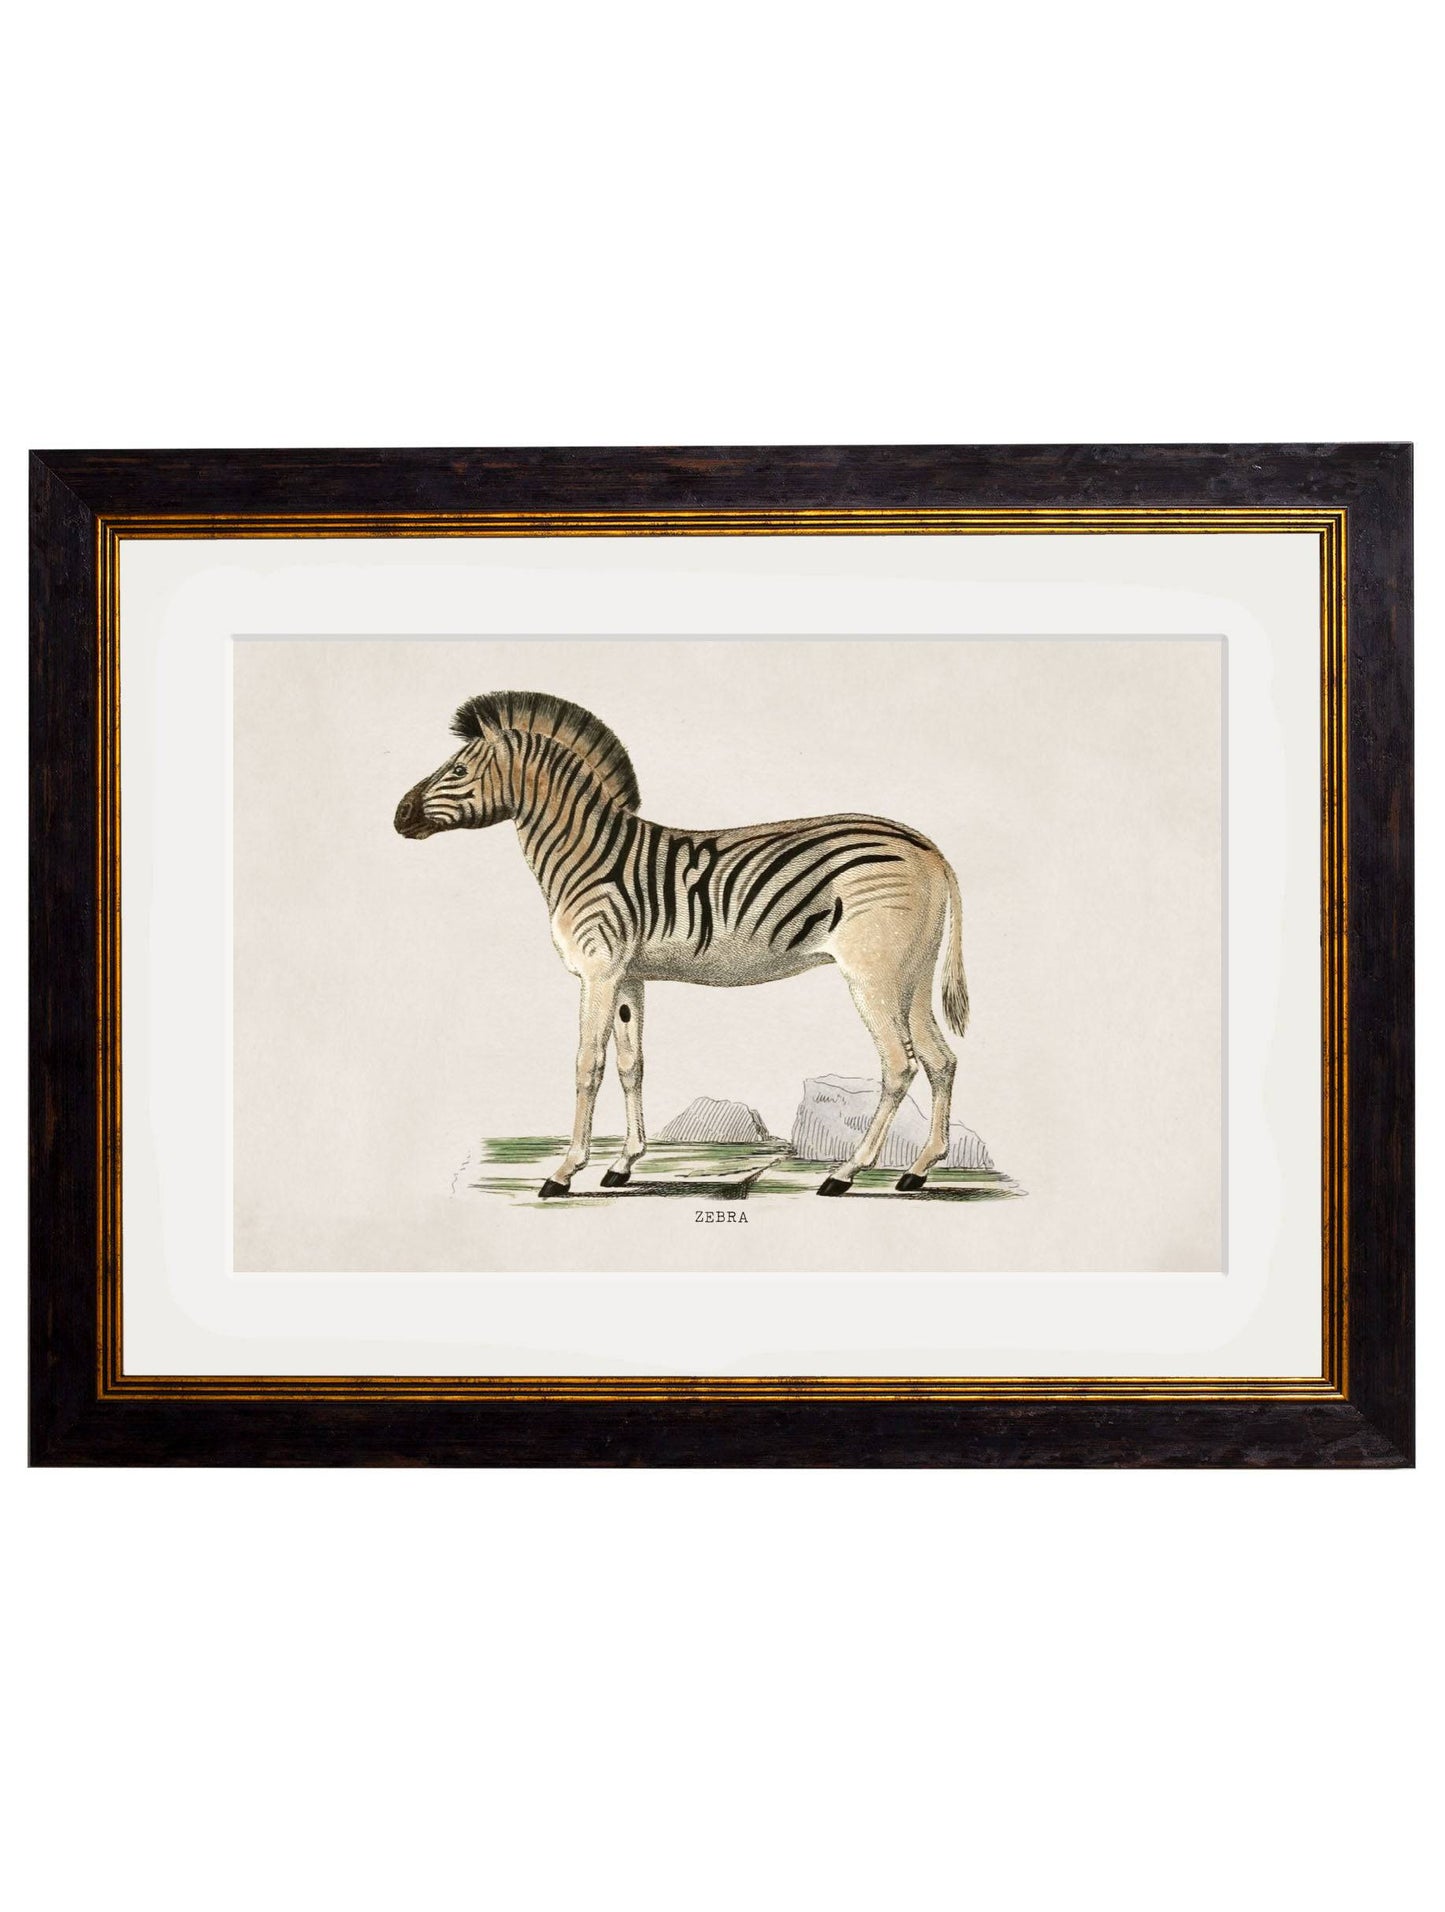 C.1836 Zebra for sale - Woodcock and Cavendish